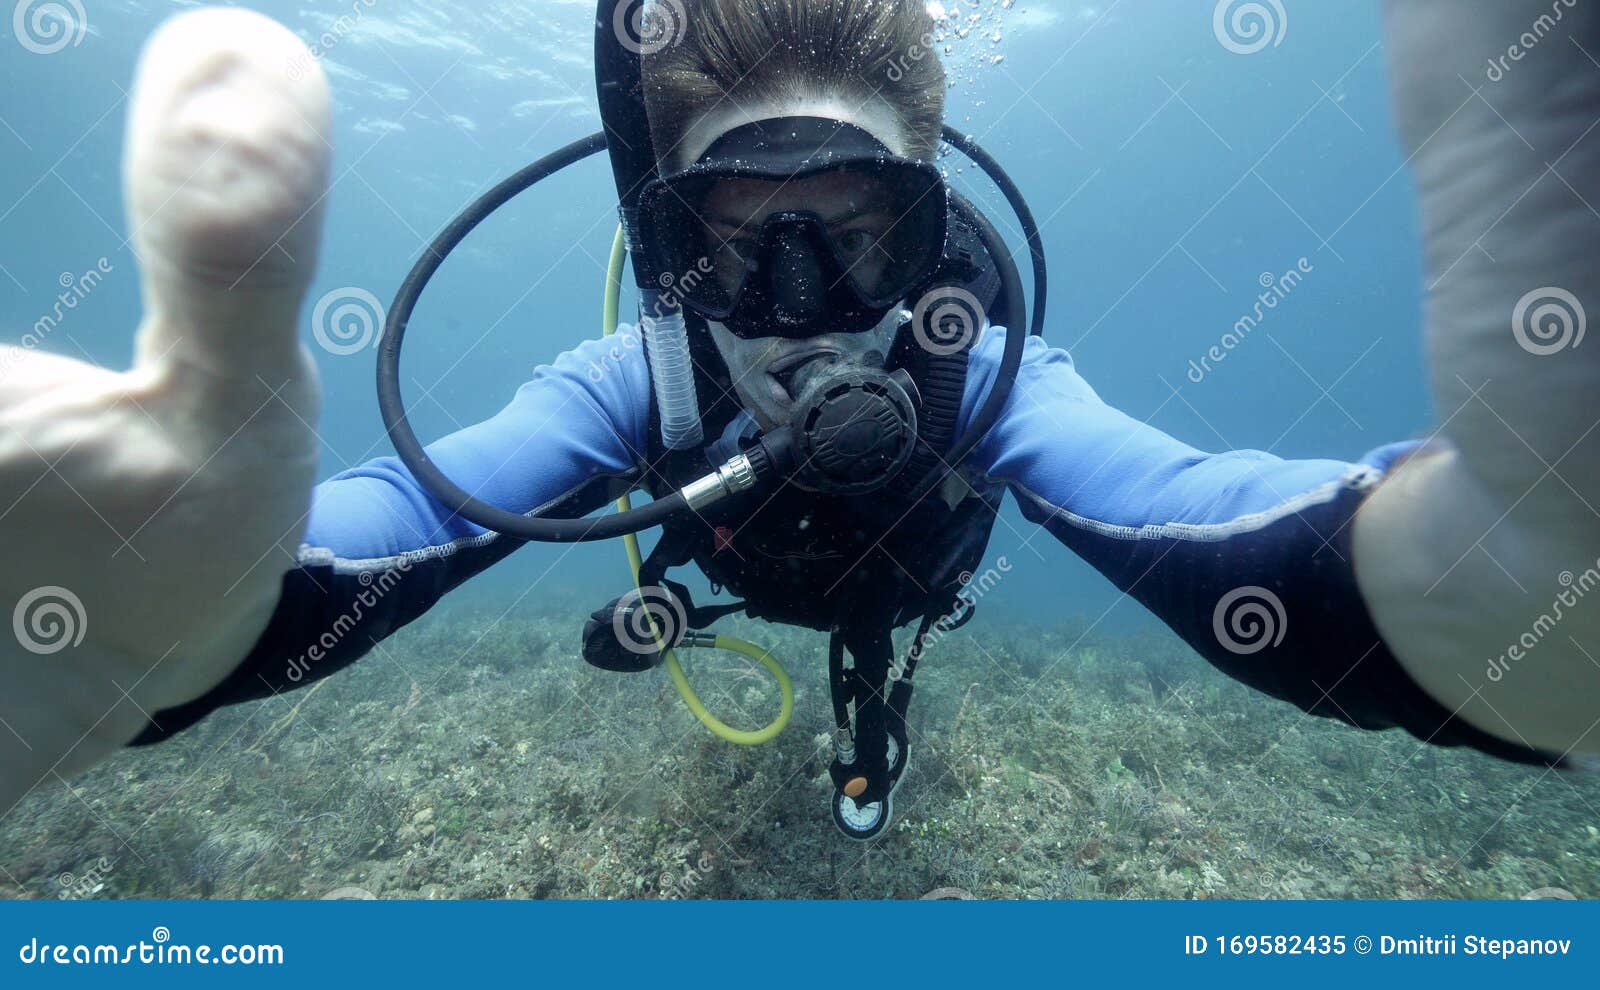 underwater selfie photo of a male suba diver in the blue ocean.